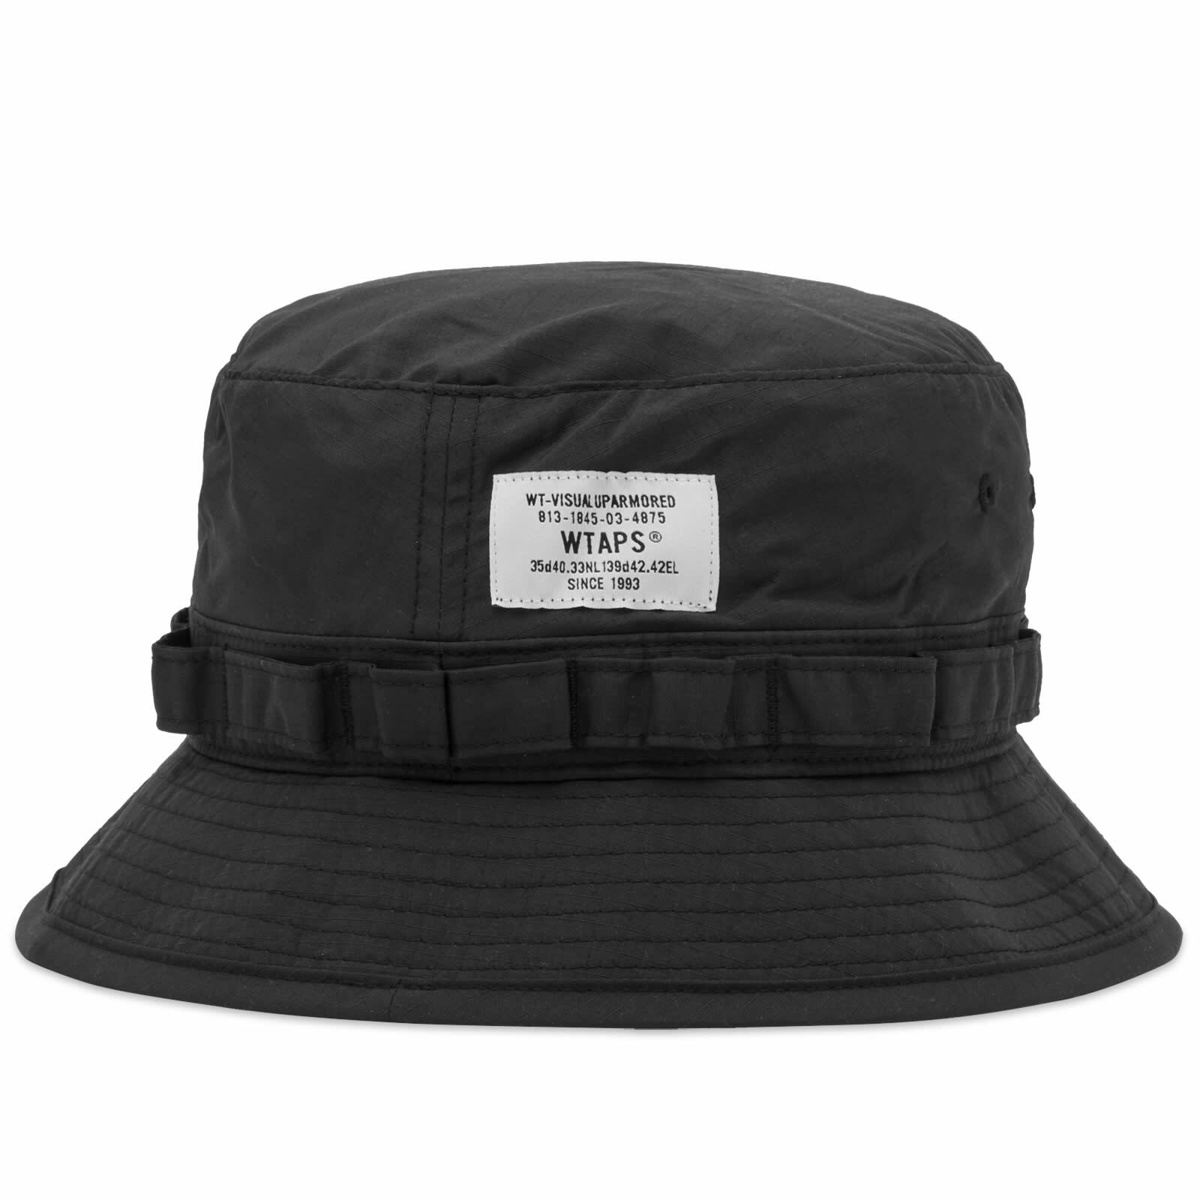 WTAPS Men's 01 Head Band Hat in Black WTAPS